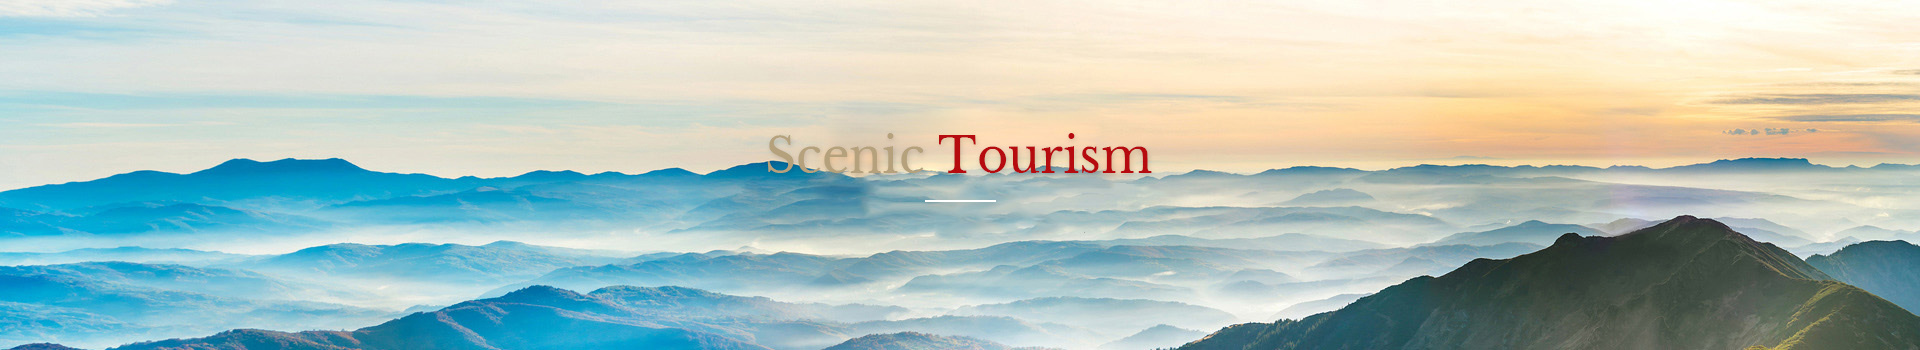 Scenic Tourism